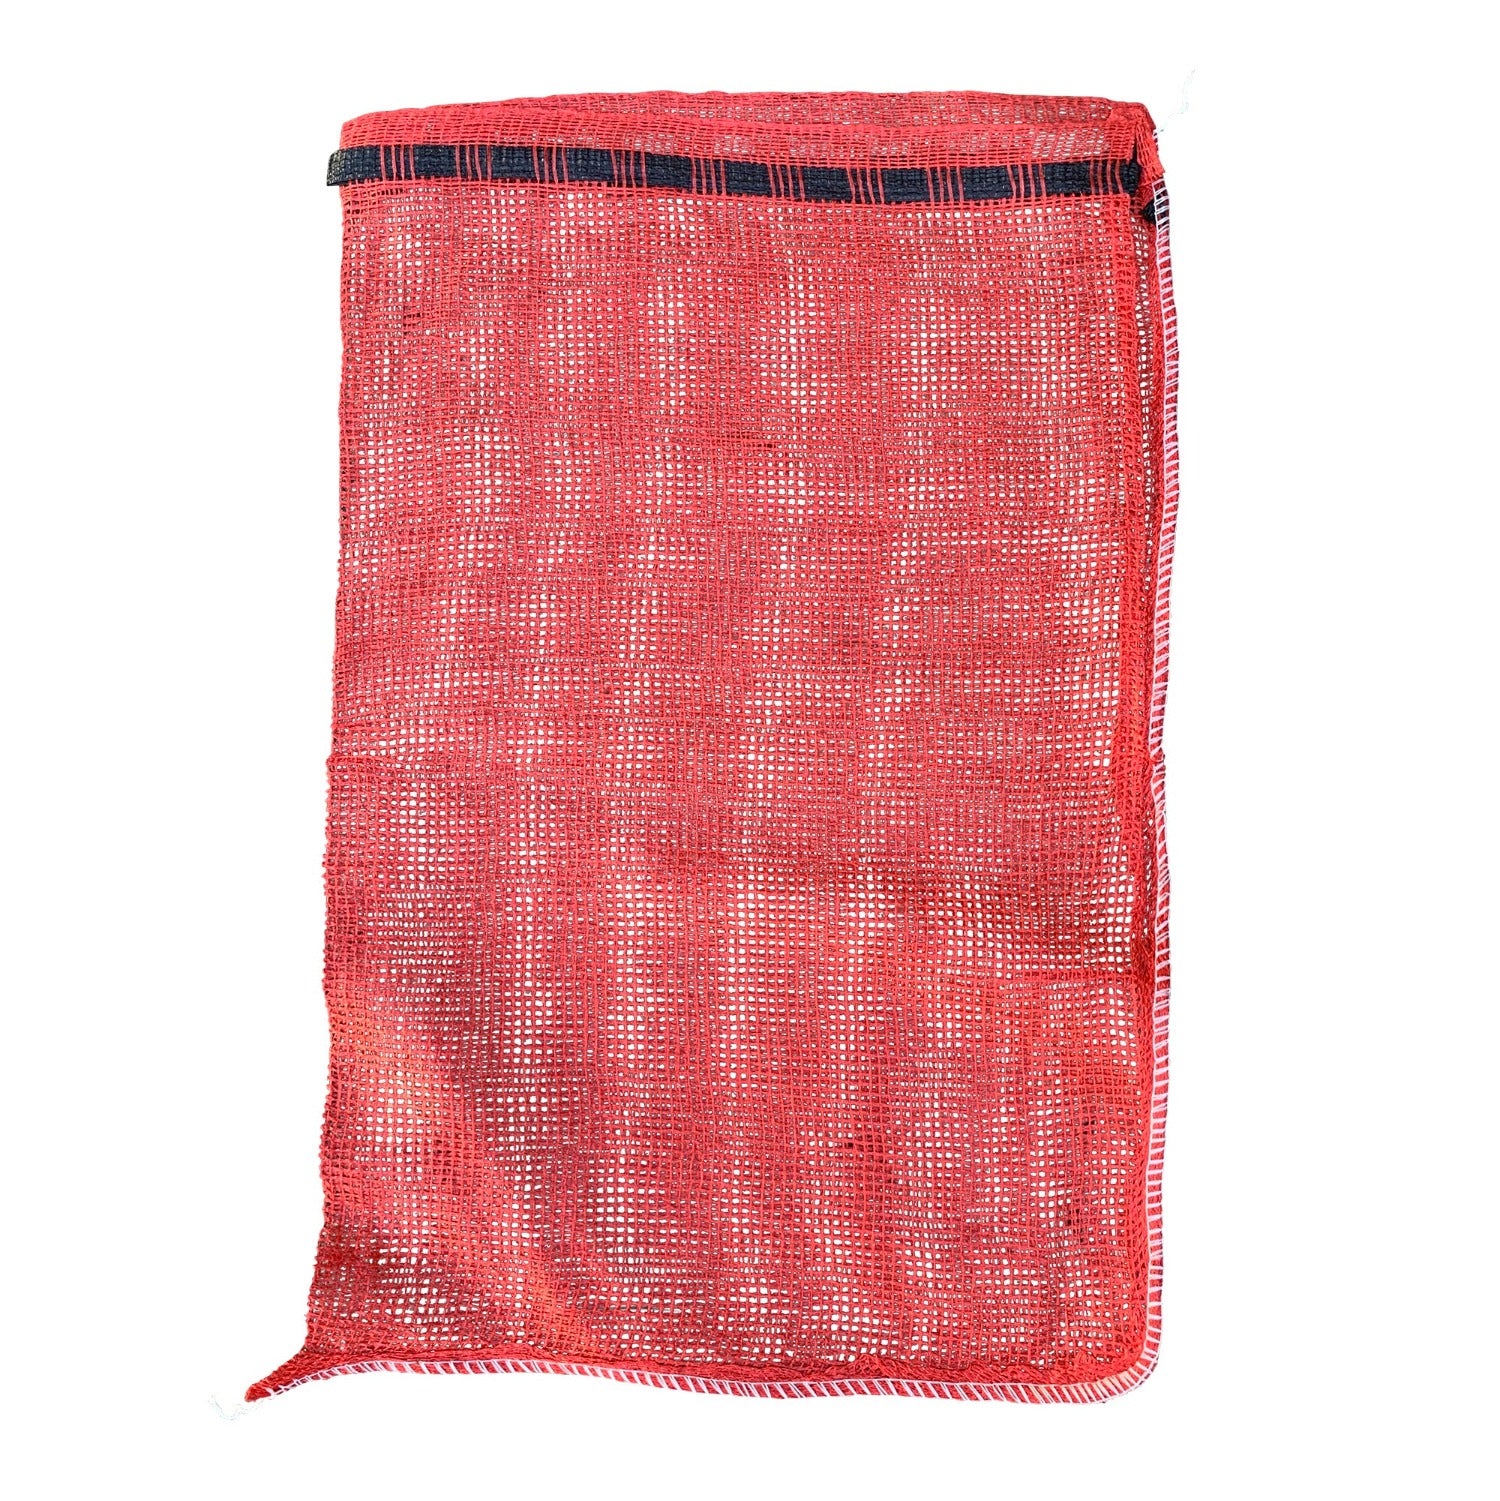 18x24 Mesh Zippered Laundry Bag - Texon Athletic Towel